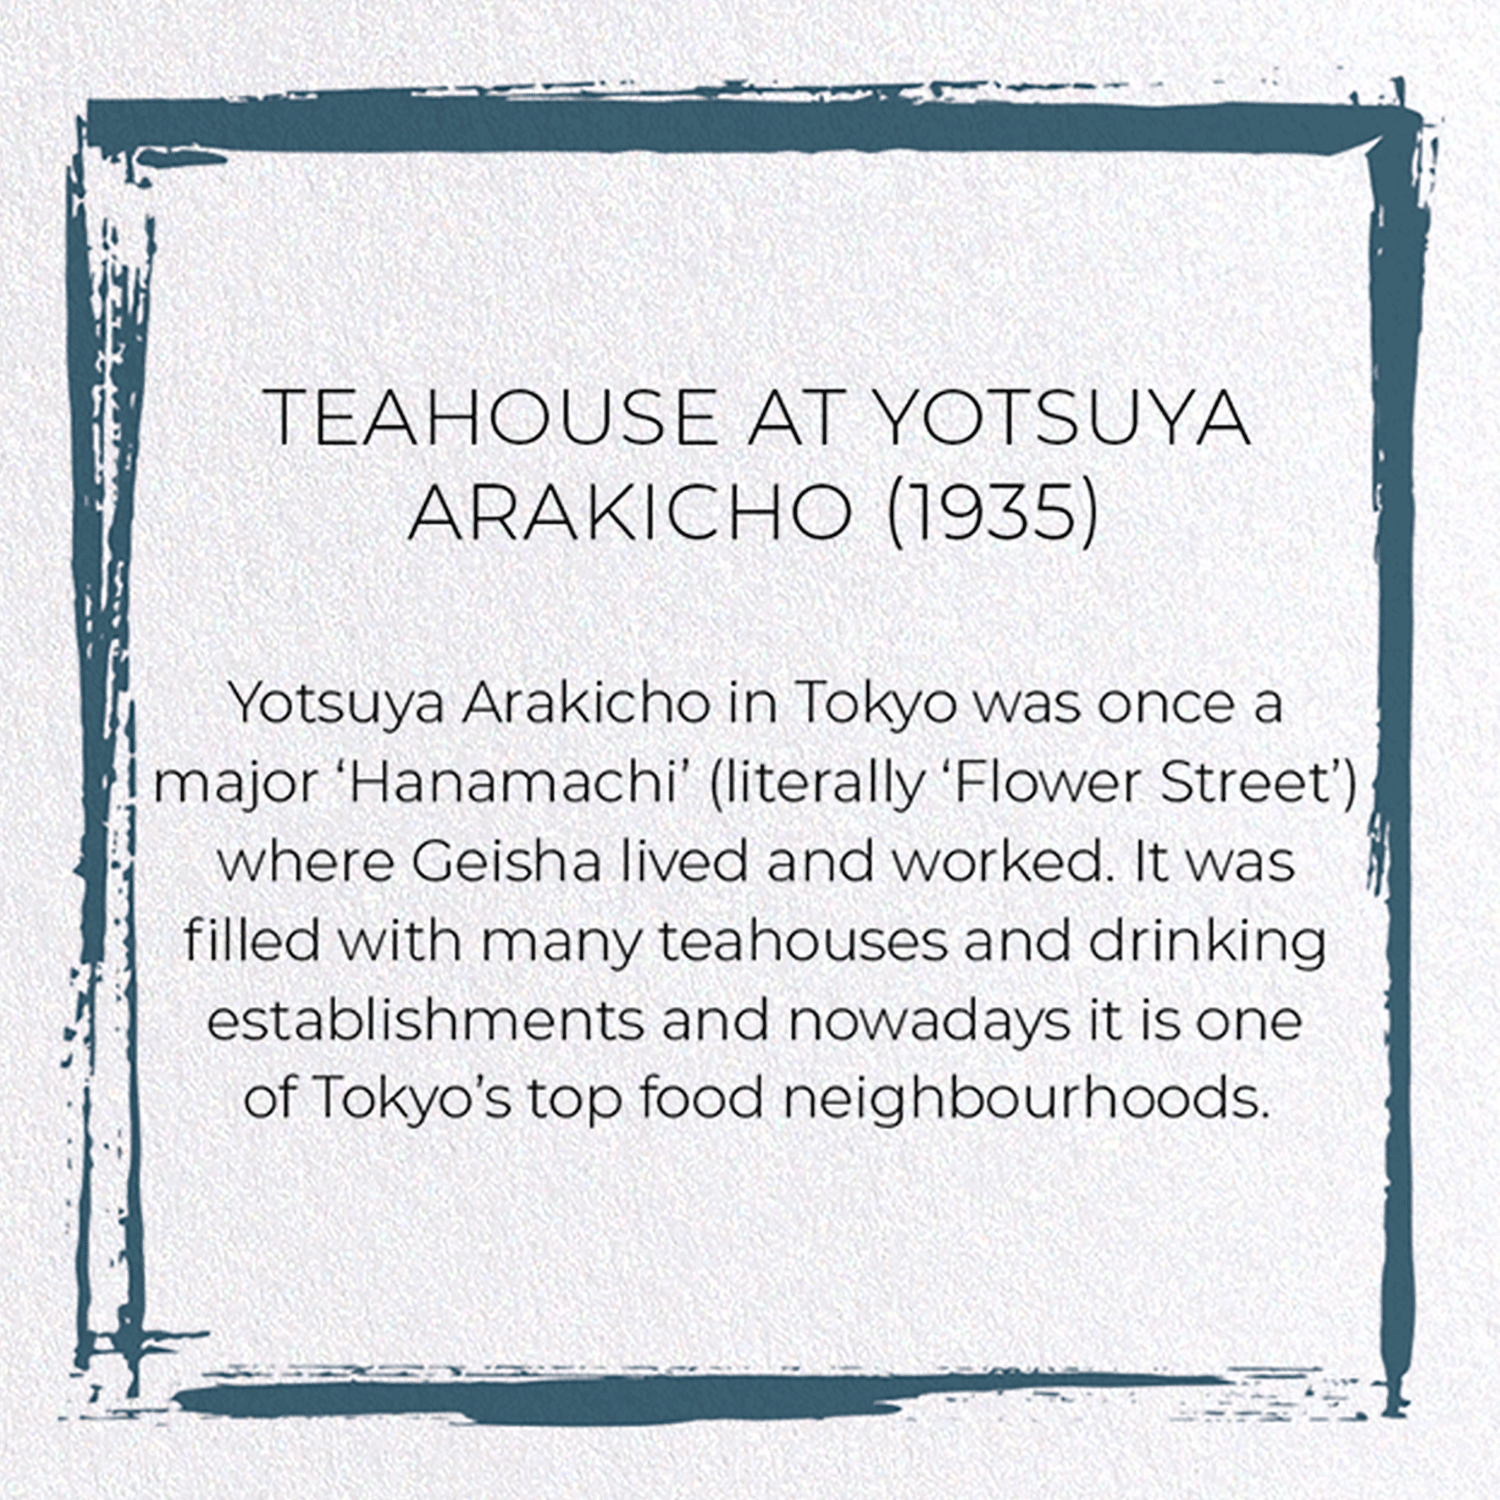 TEAHOUSE AT YOTSUYA ARAKICHO (1935): Japanese Greeting Card